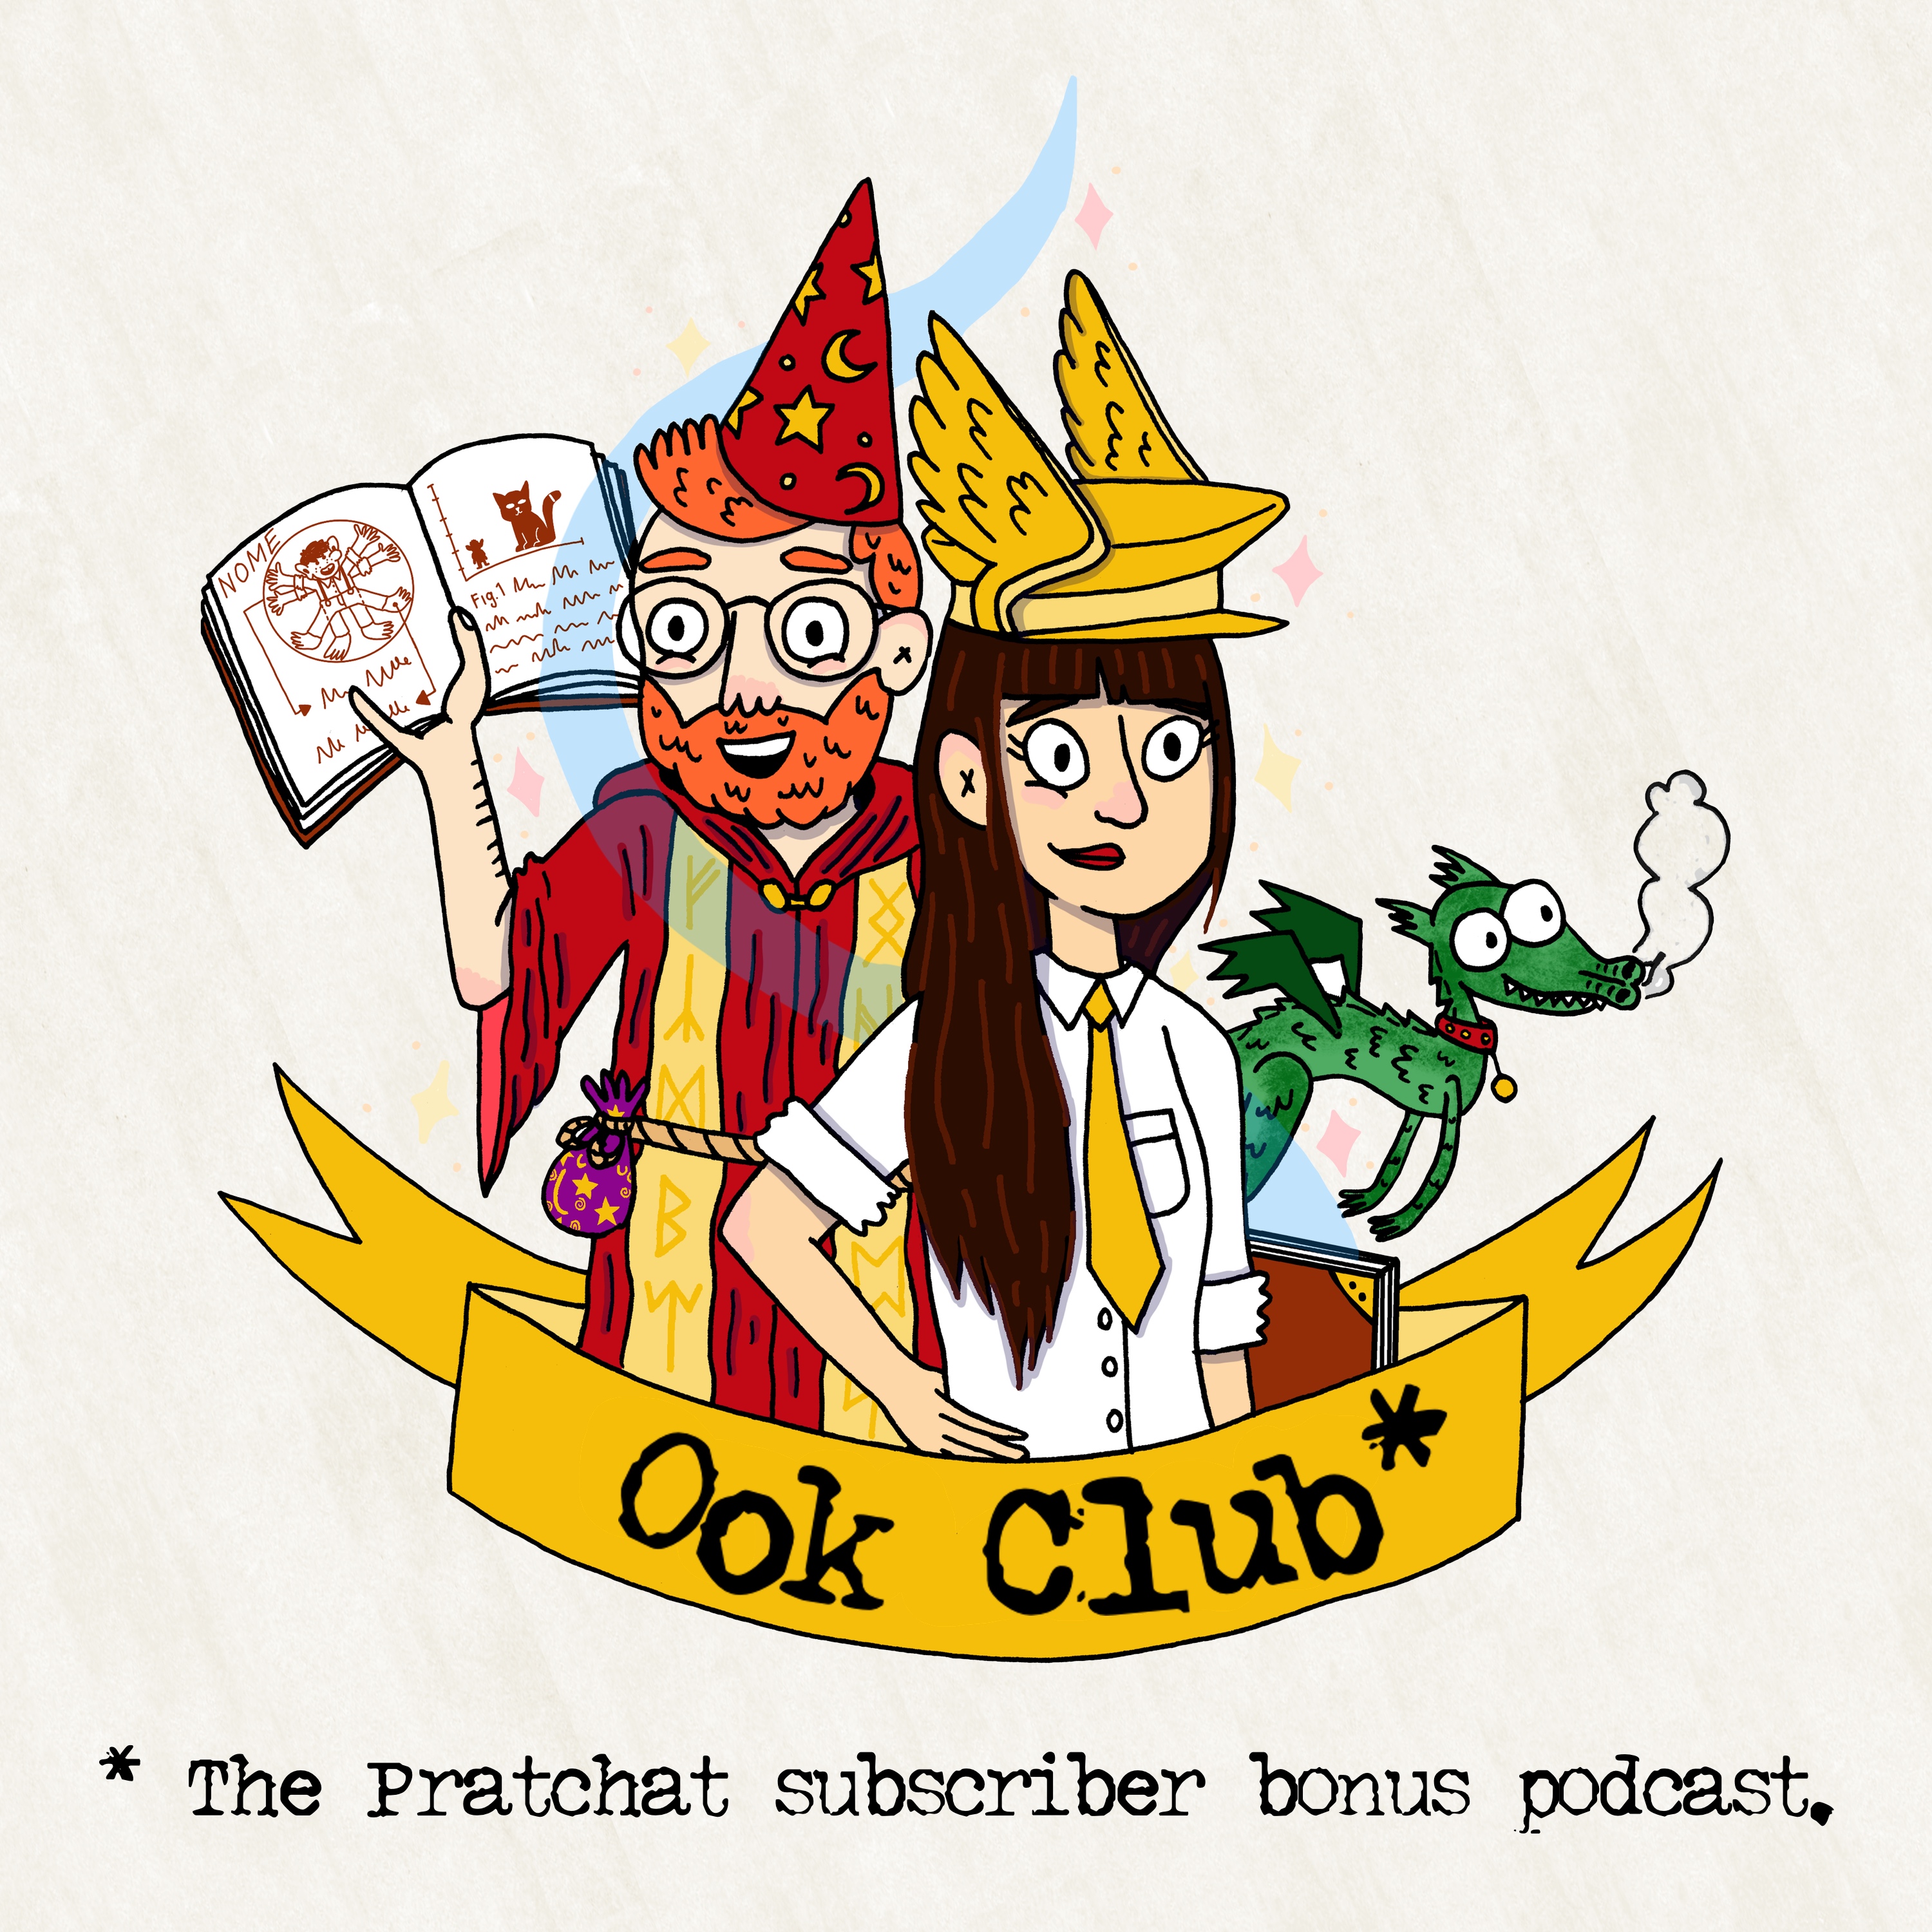 Ook Club - the Pratchat subscriber bonus podcast.